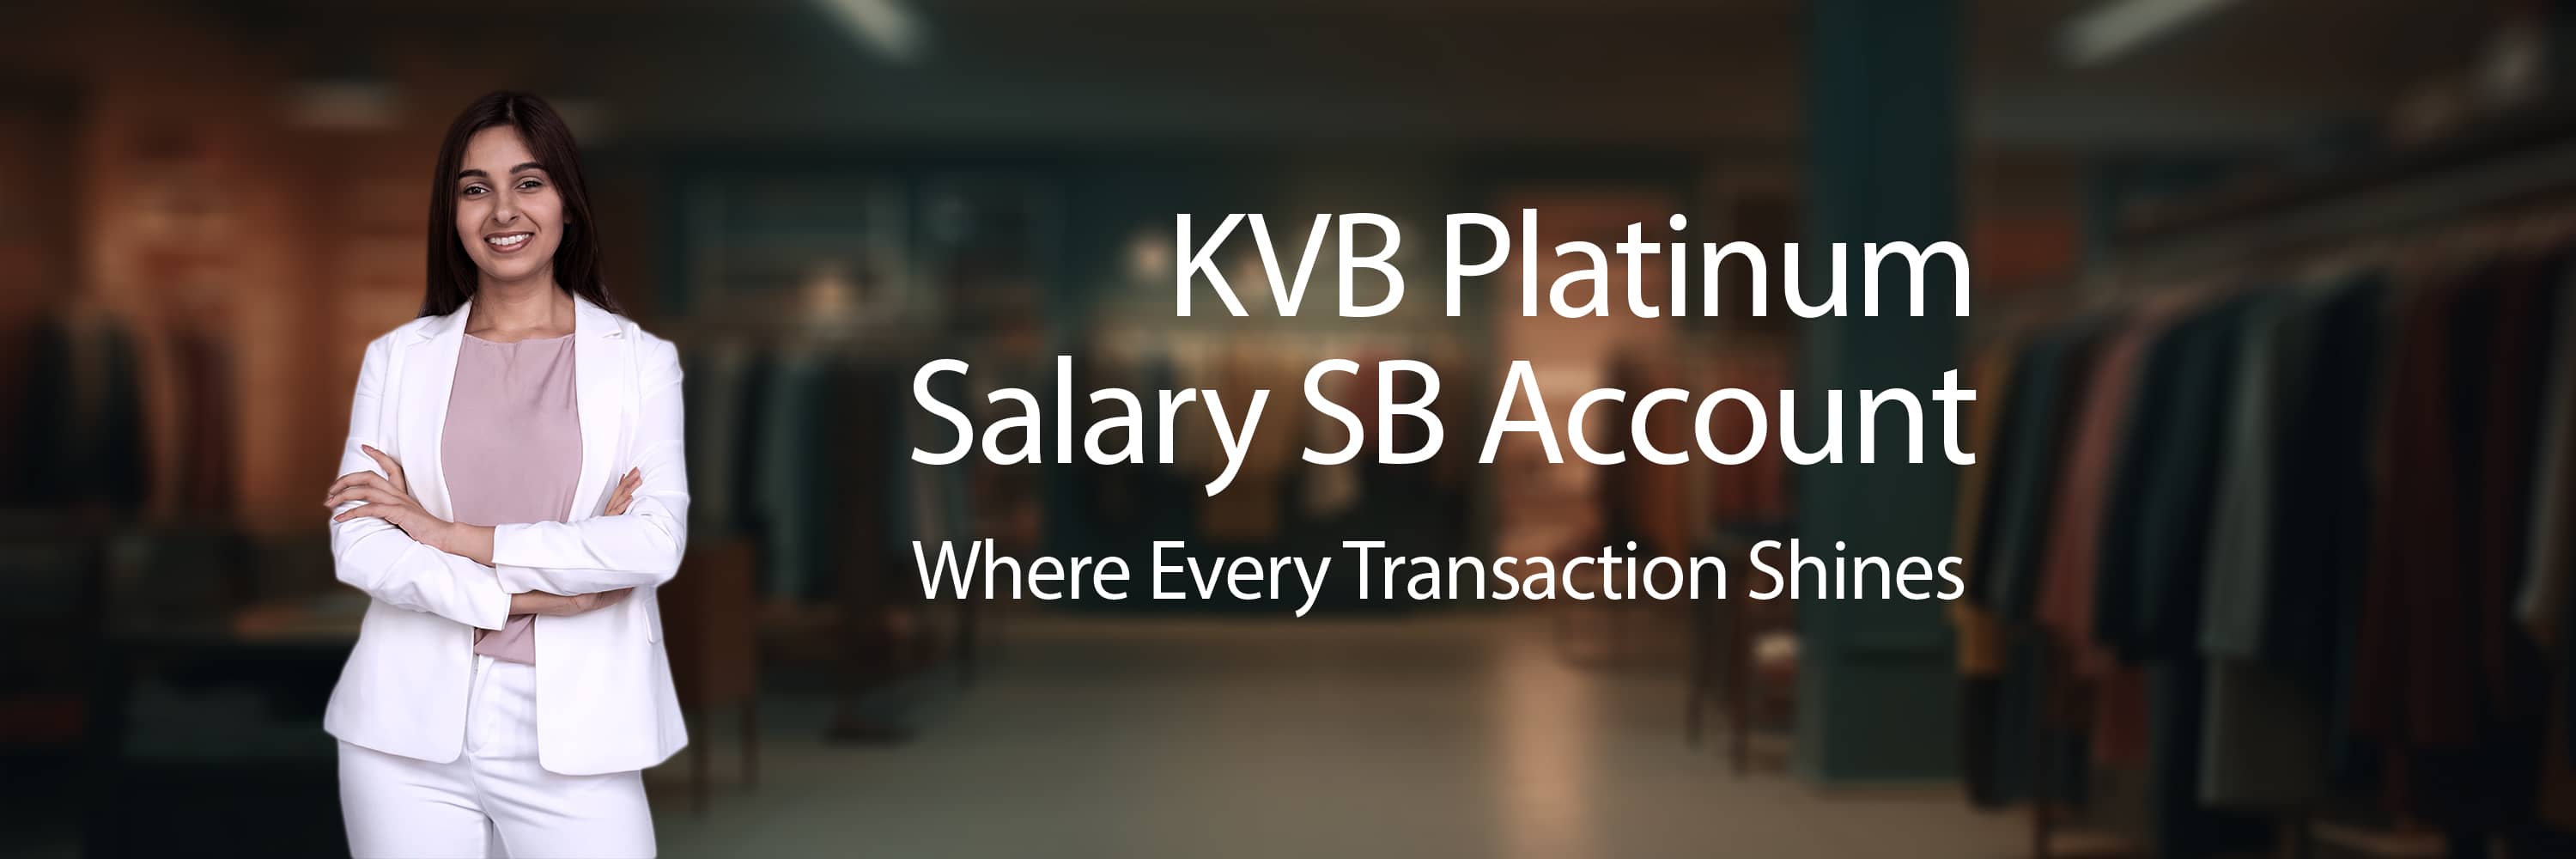 KVB Platinum Salary SB Account